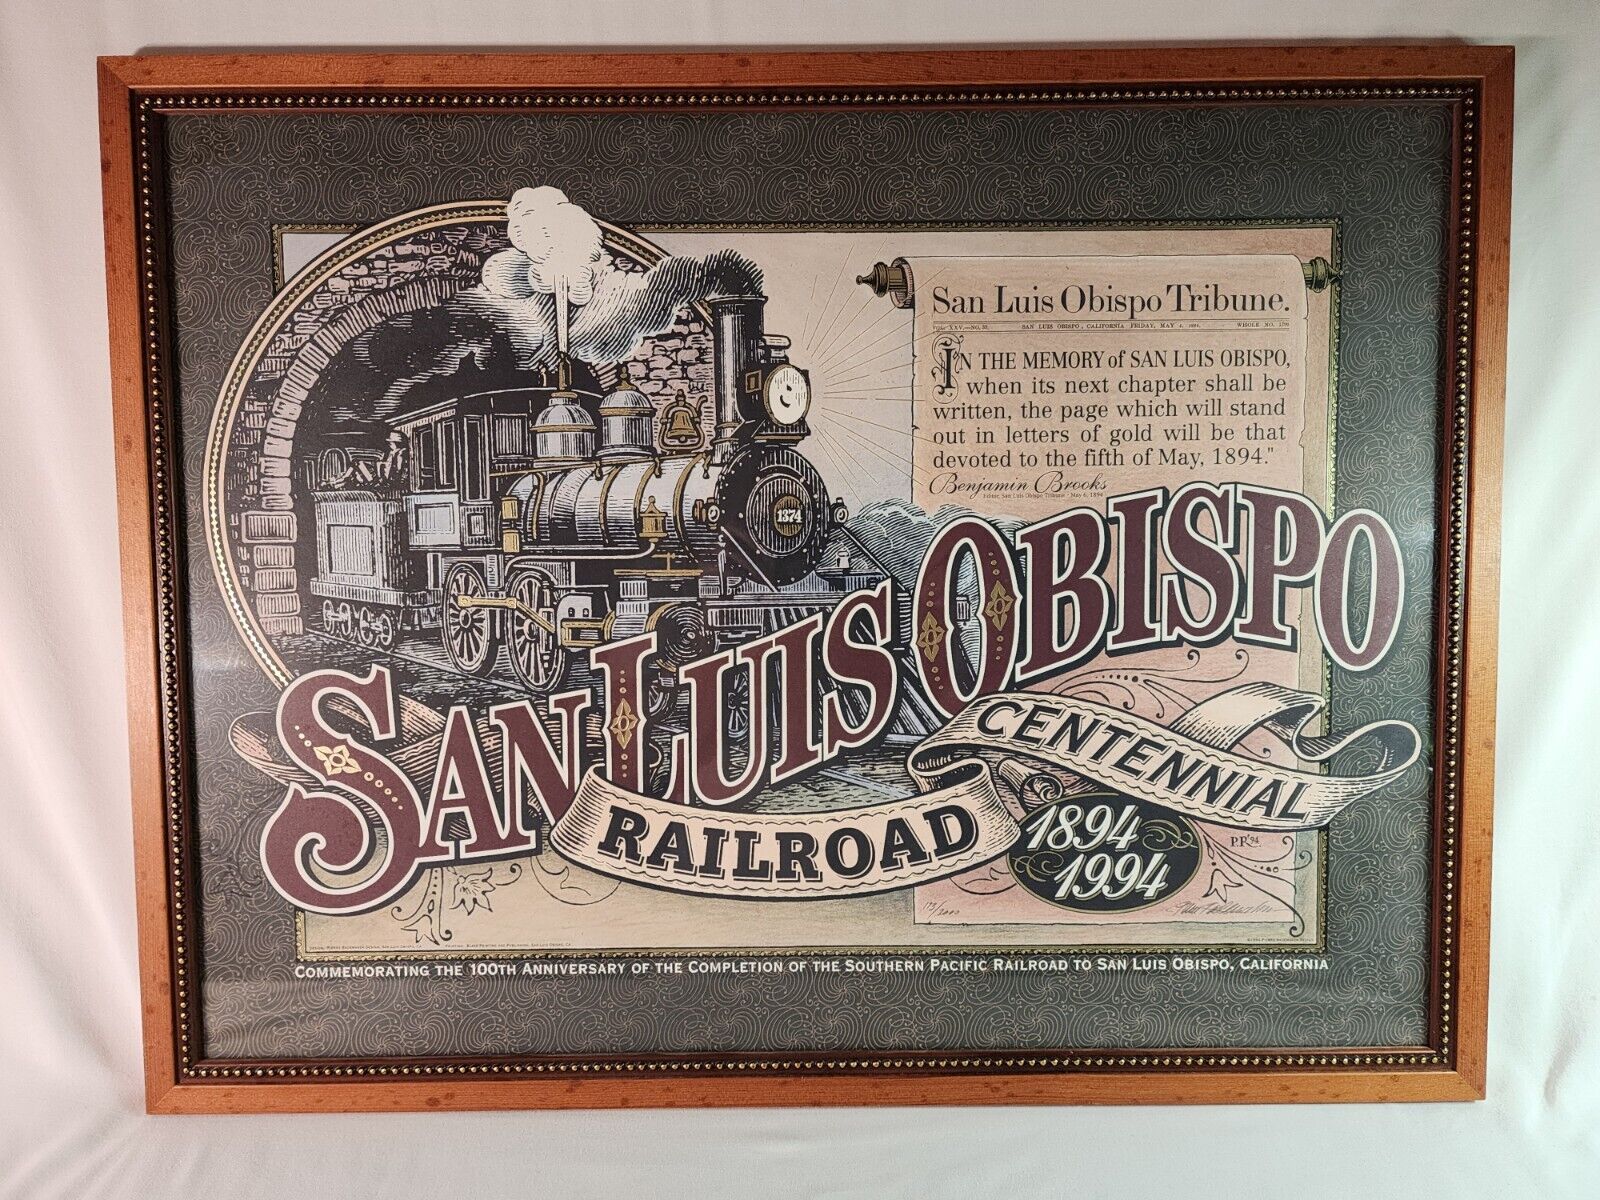 San Luis Obispo Railroad Centennial Lithograph - Signed By Artist - #173 of 2000